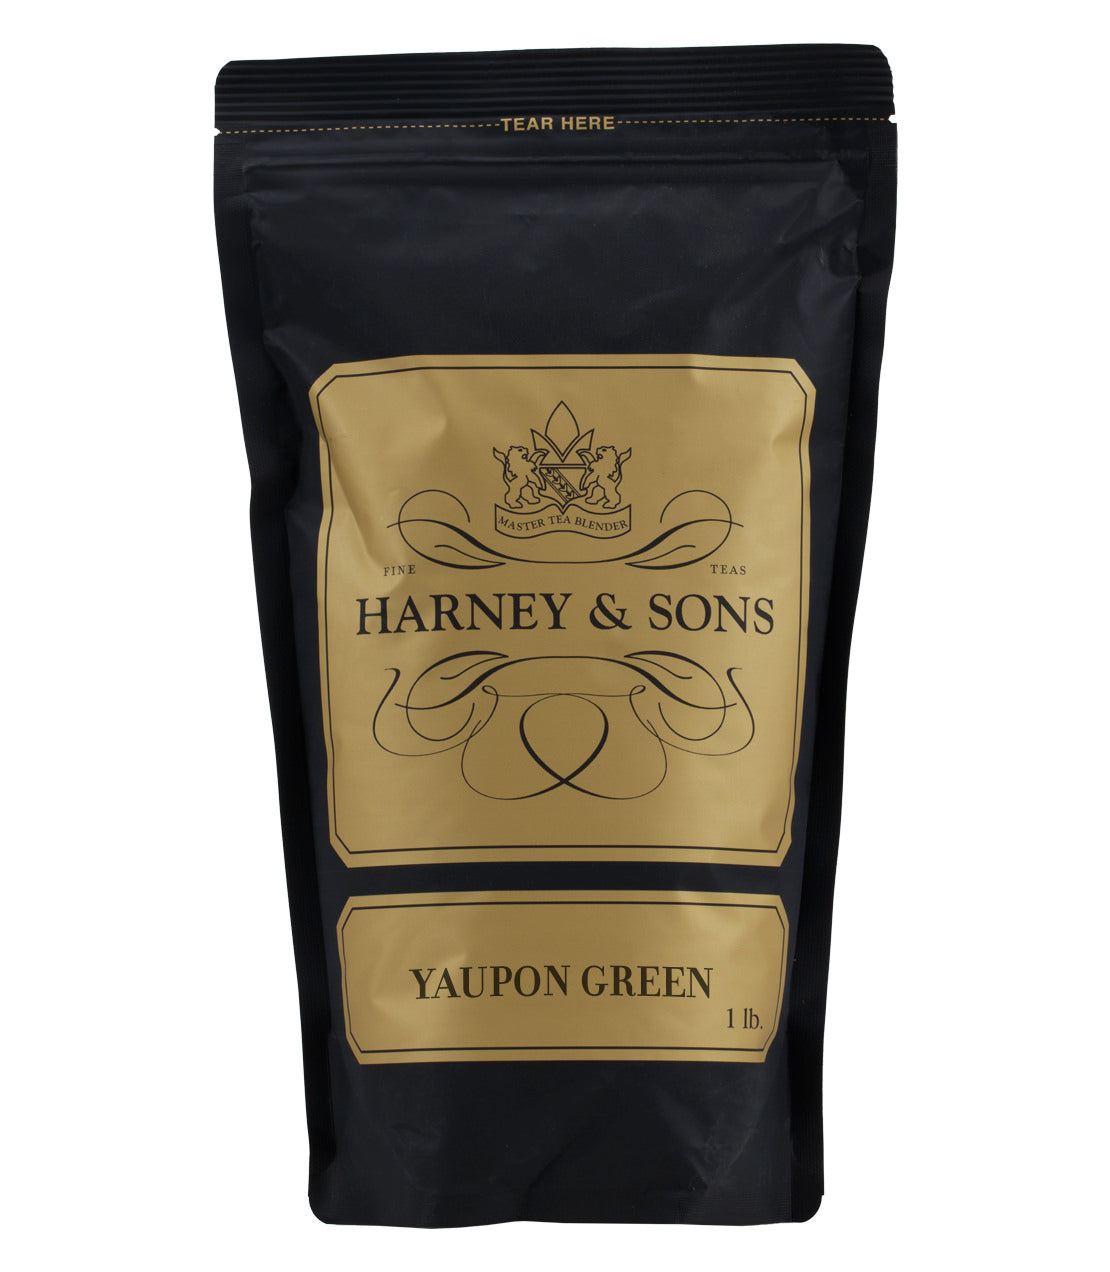 Yaupon Green - Loose 1 lb. Bag - Harney & Sons Fine Teas